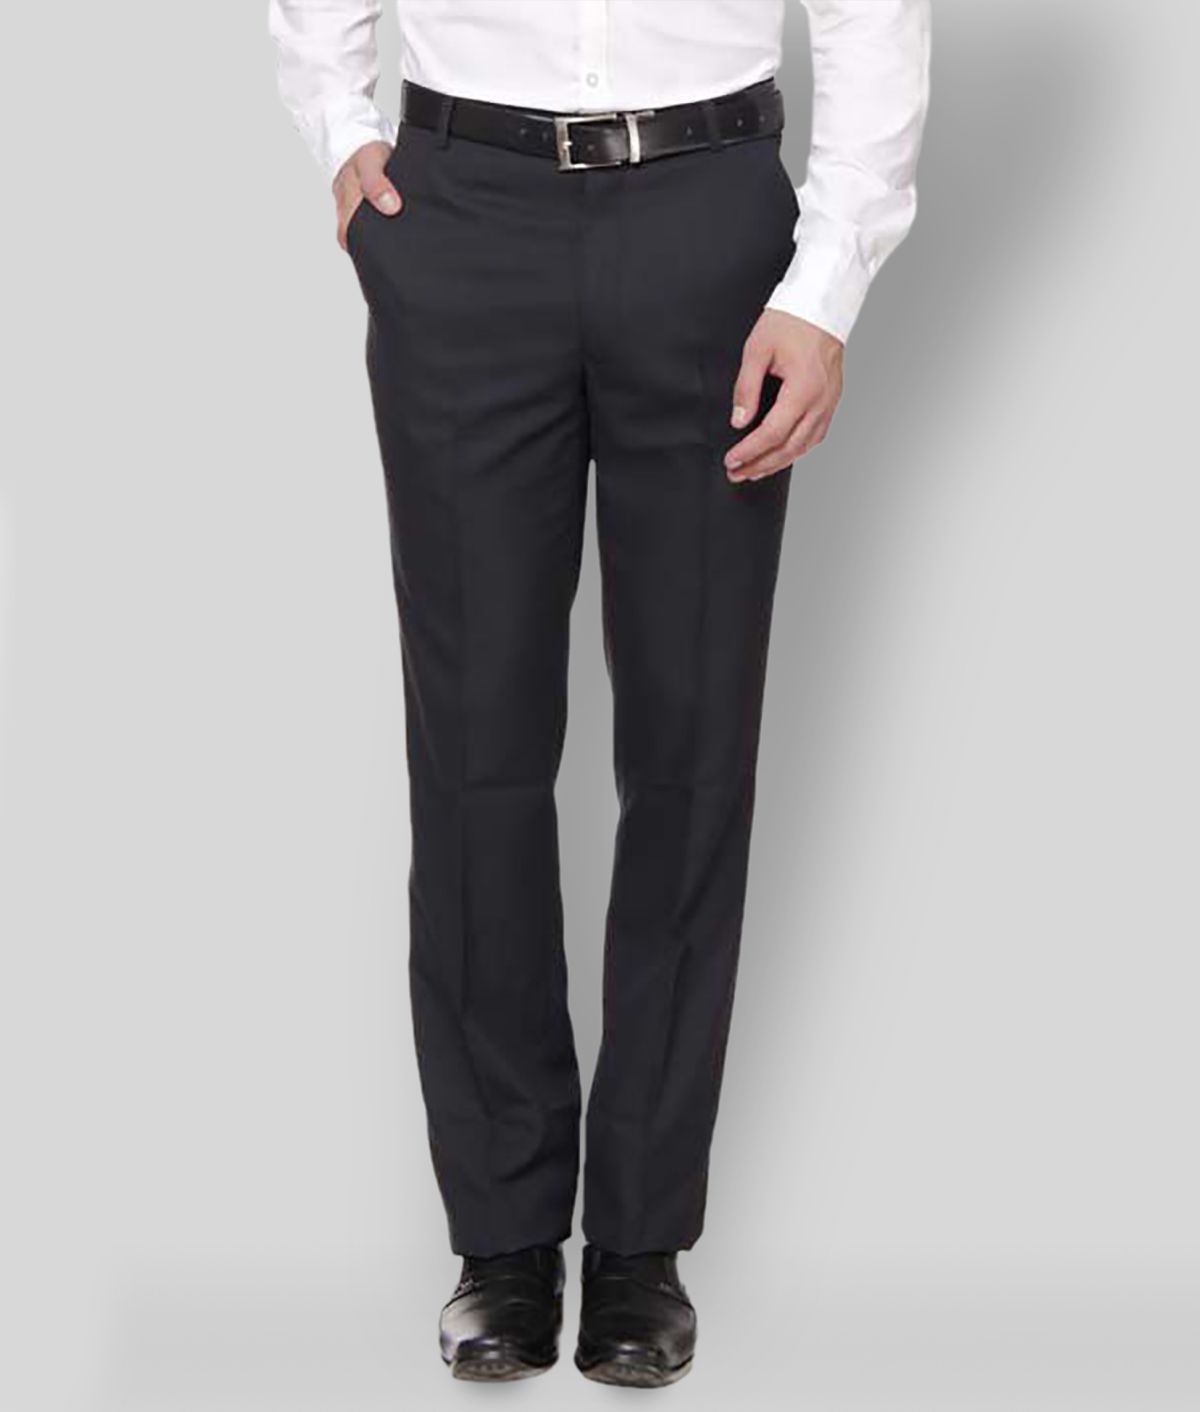     			Inspire Clothing Inspiration - Black Polycotton Slim - Fit Men's Formal Pants ( Pack of 1 )